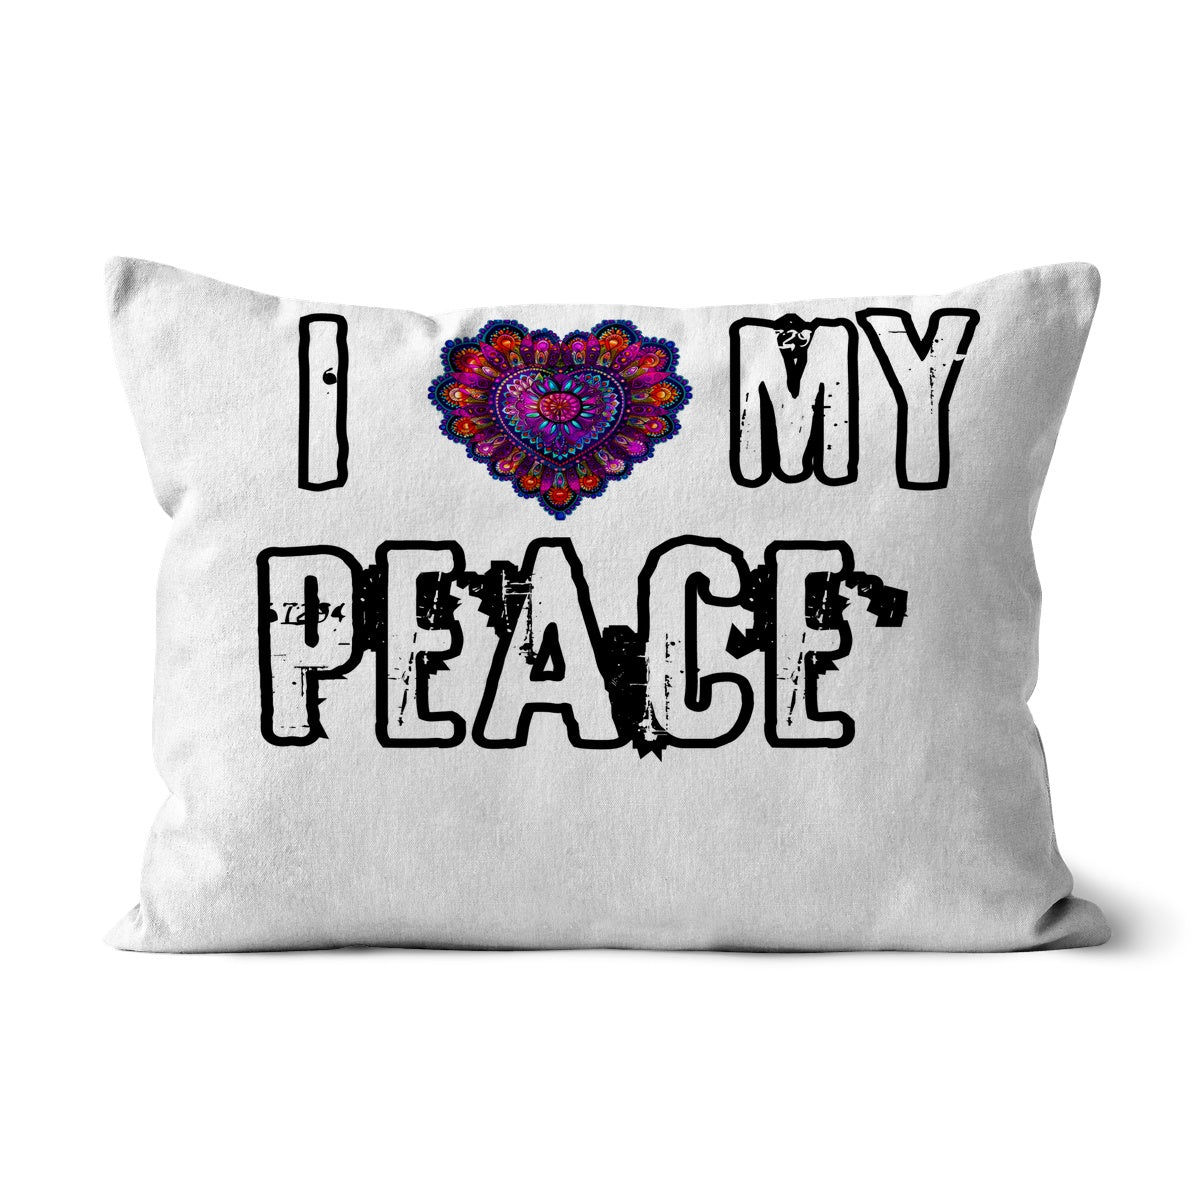 I Love My Peace Cushion